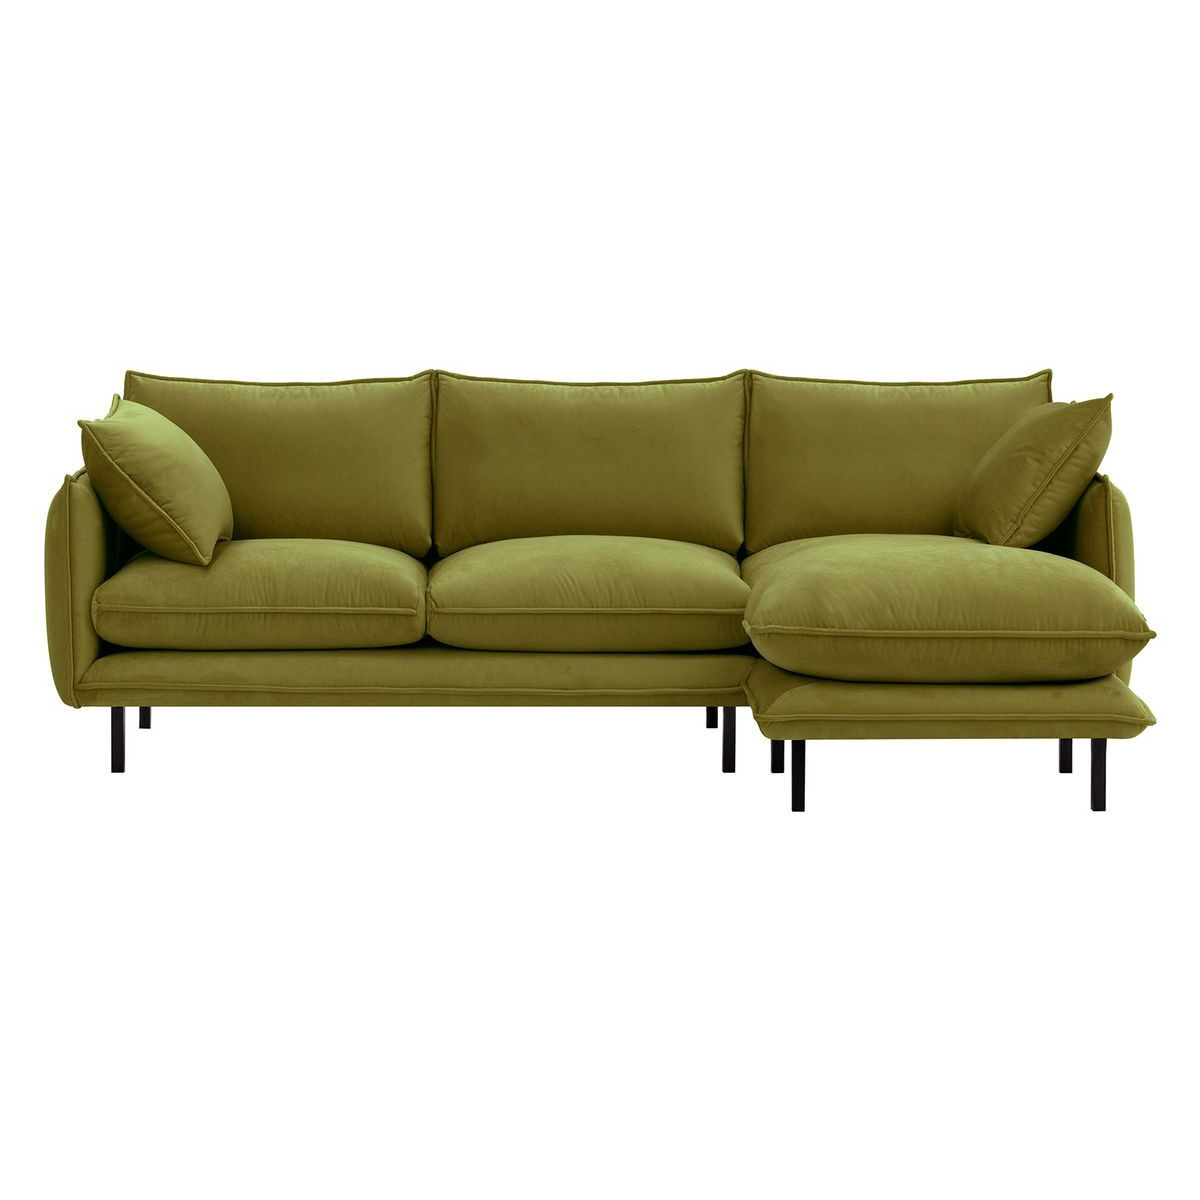 Nimbus Right Hand Corner Sofa, olive green - image 1